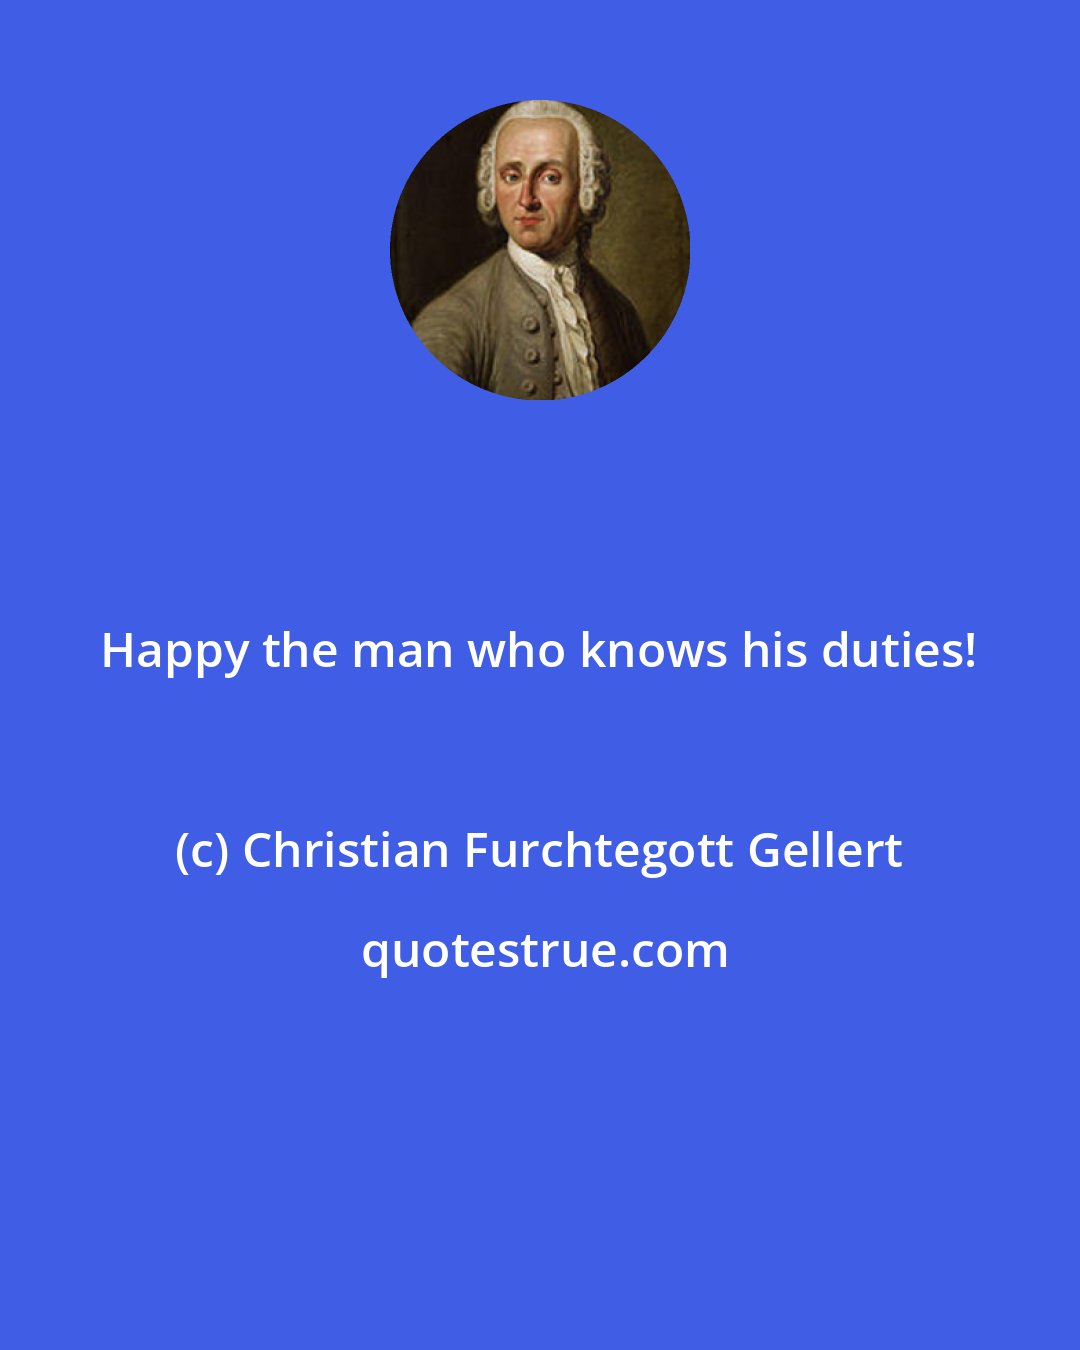 Christian Furchtegott Gellert: Happy the man who knows his duties!